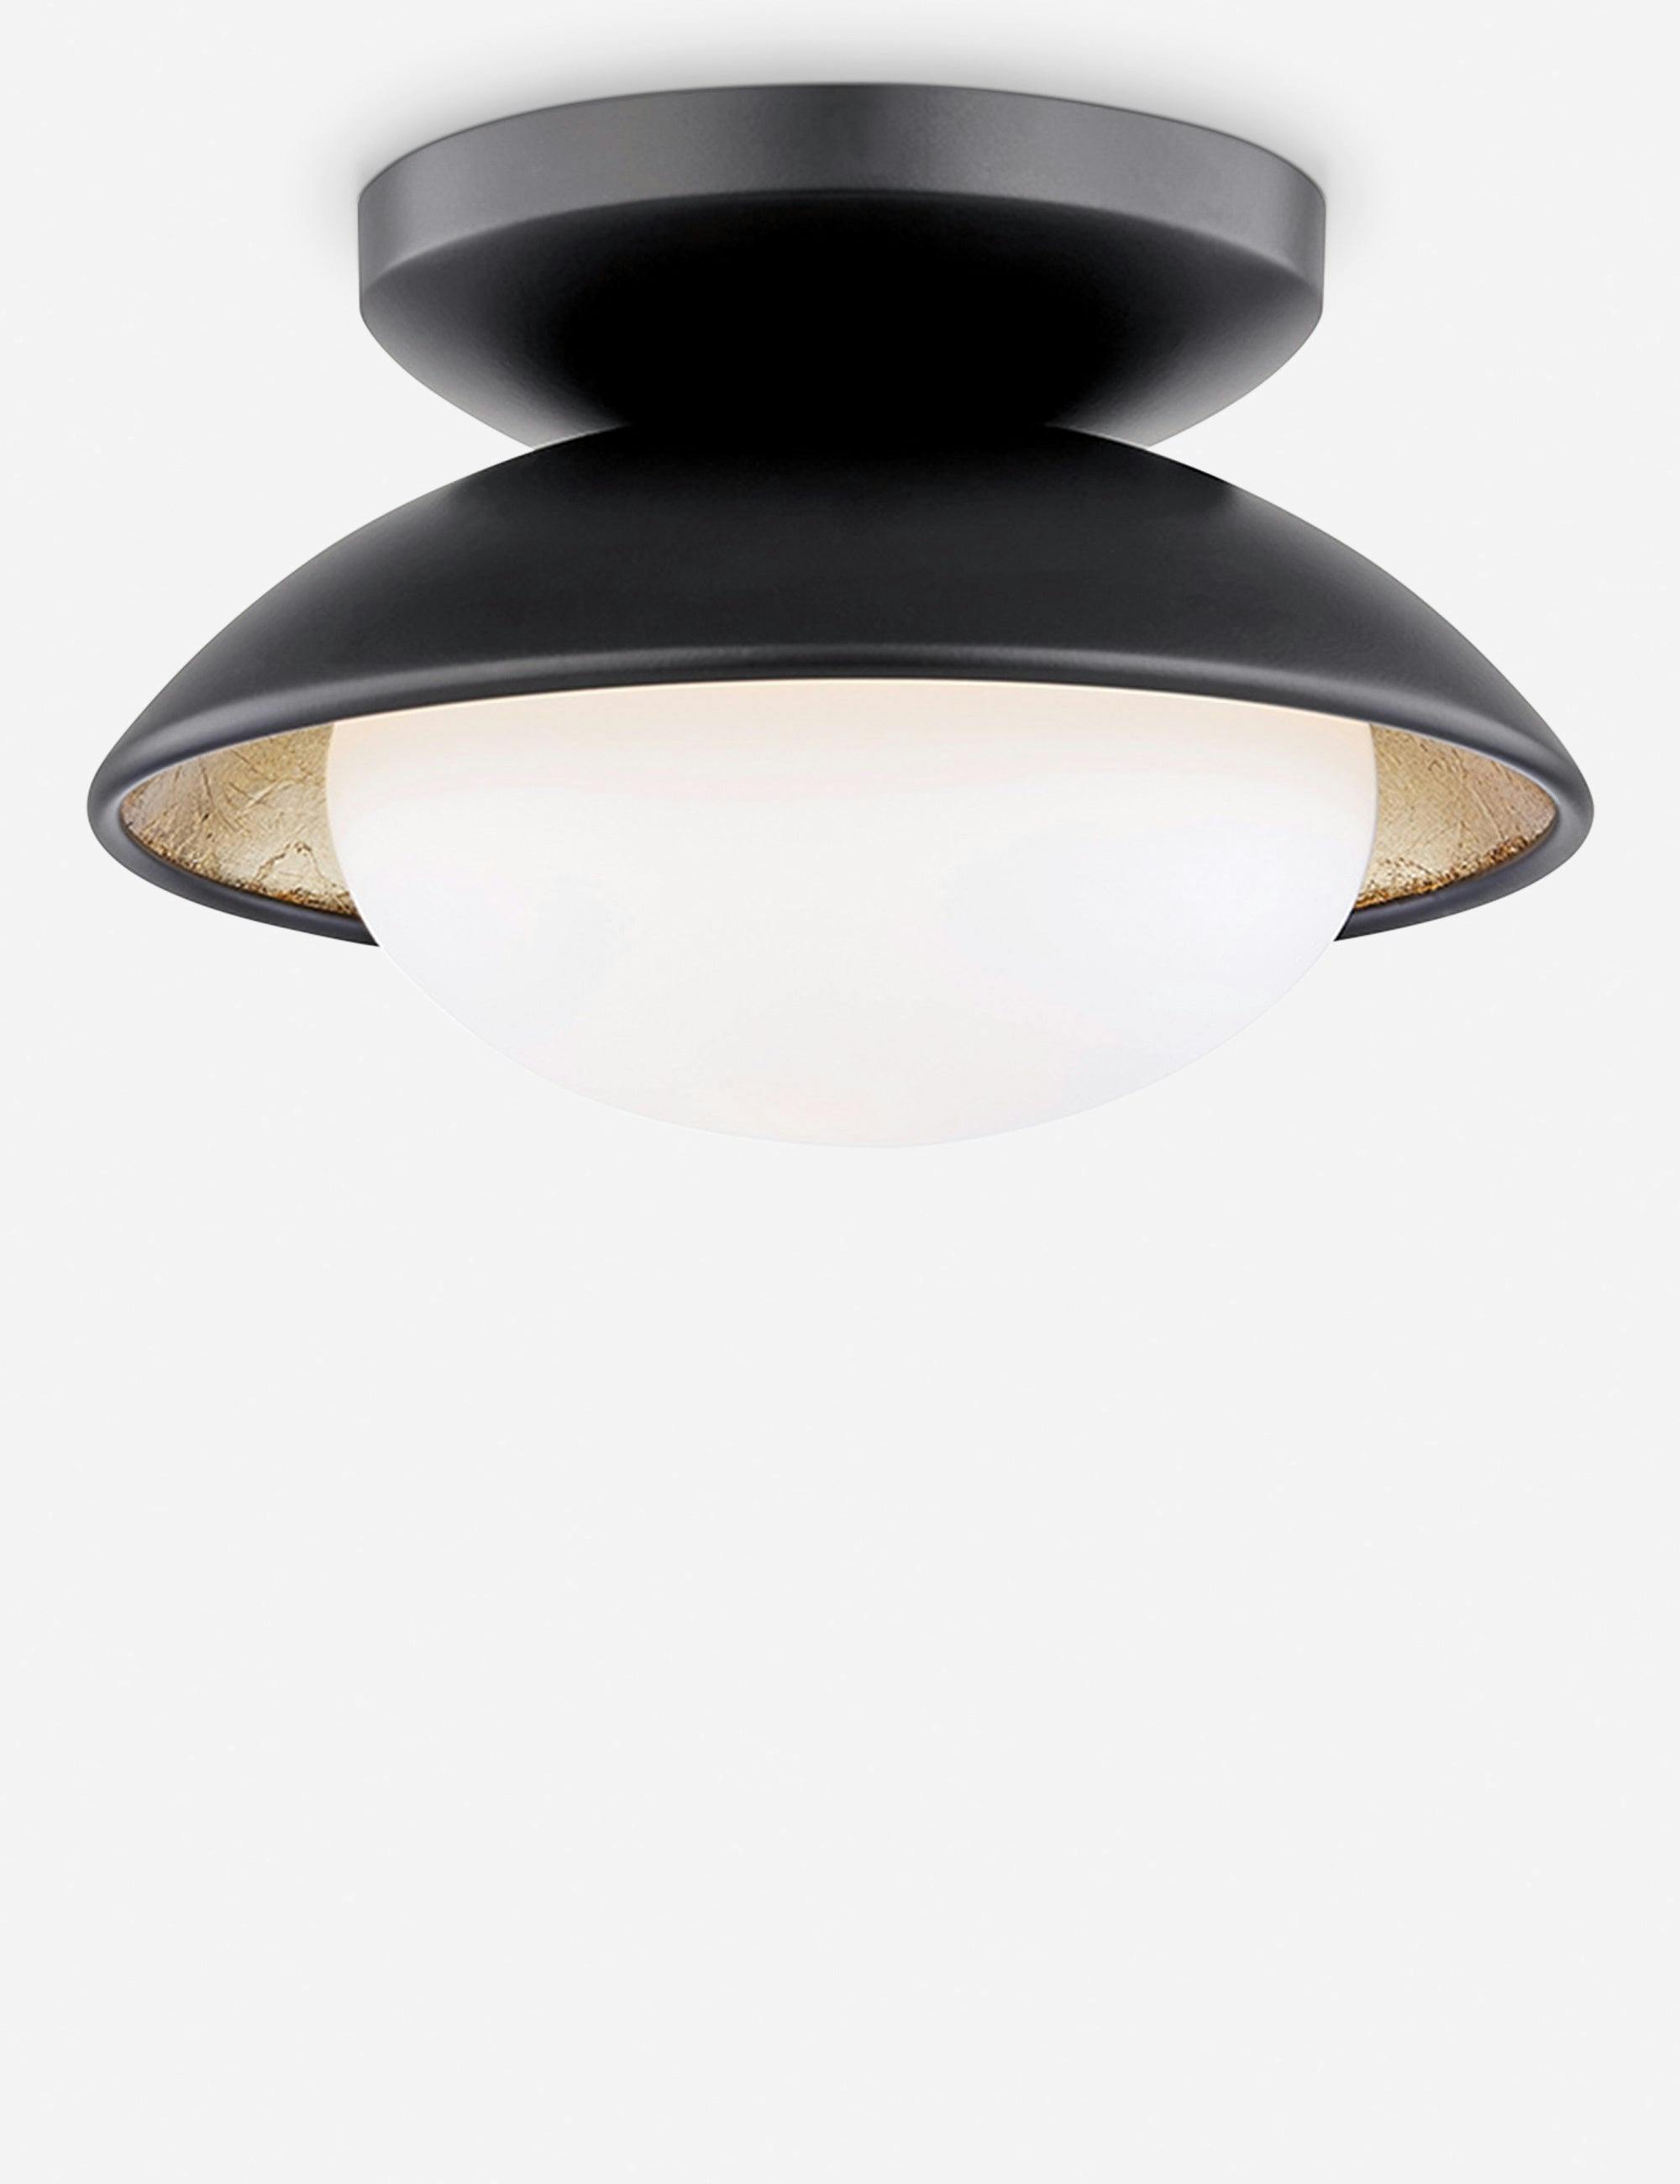 Cadence Black Lustro & Gold Leaf LED Semi-Flush Light, Opal Matte Shade